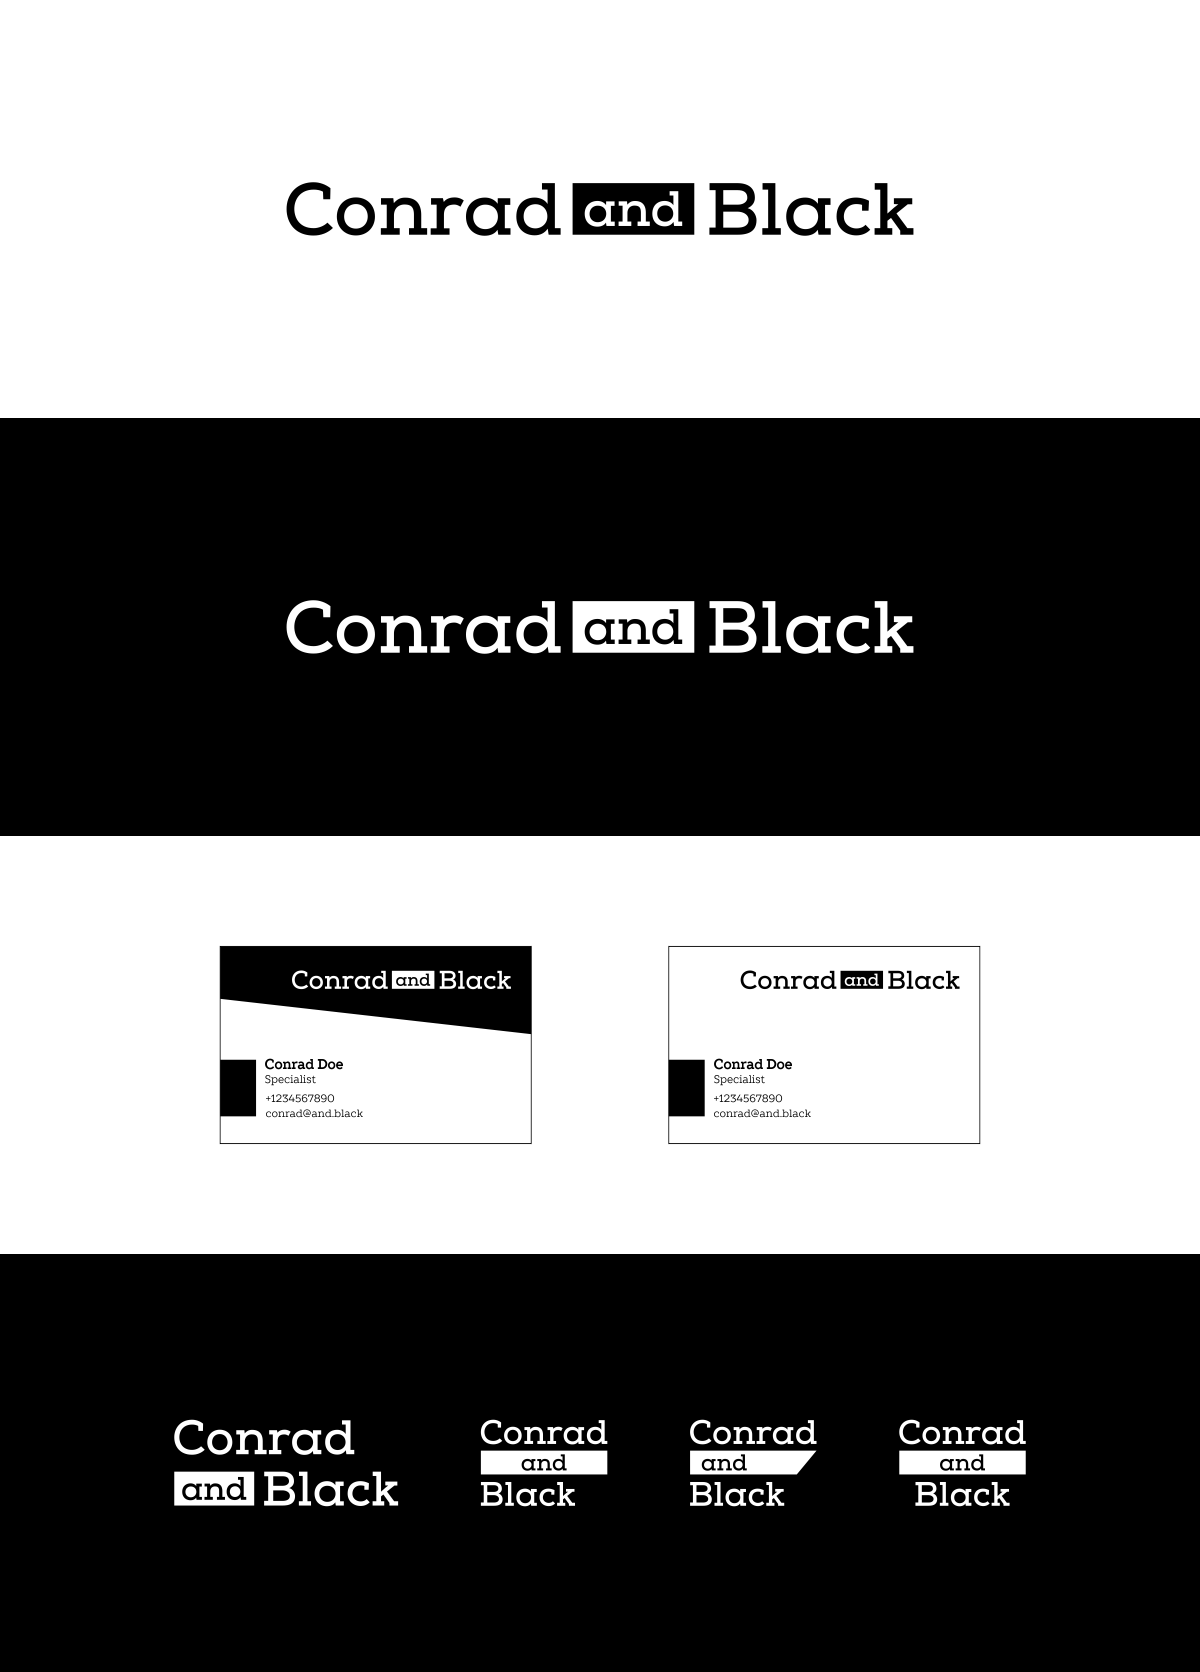 conrad_and_black1.png